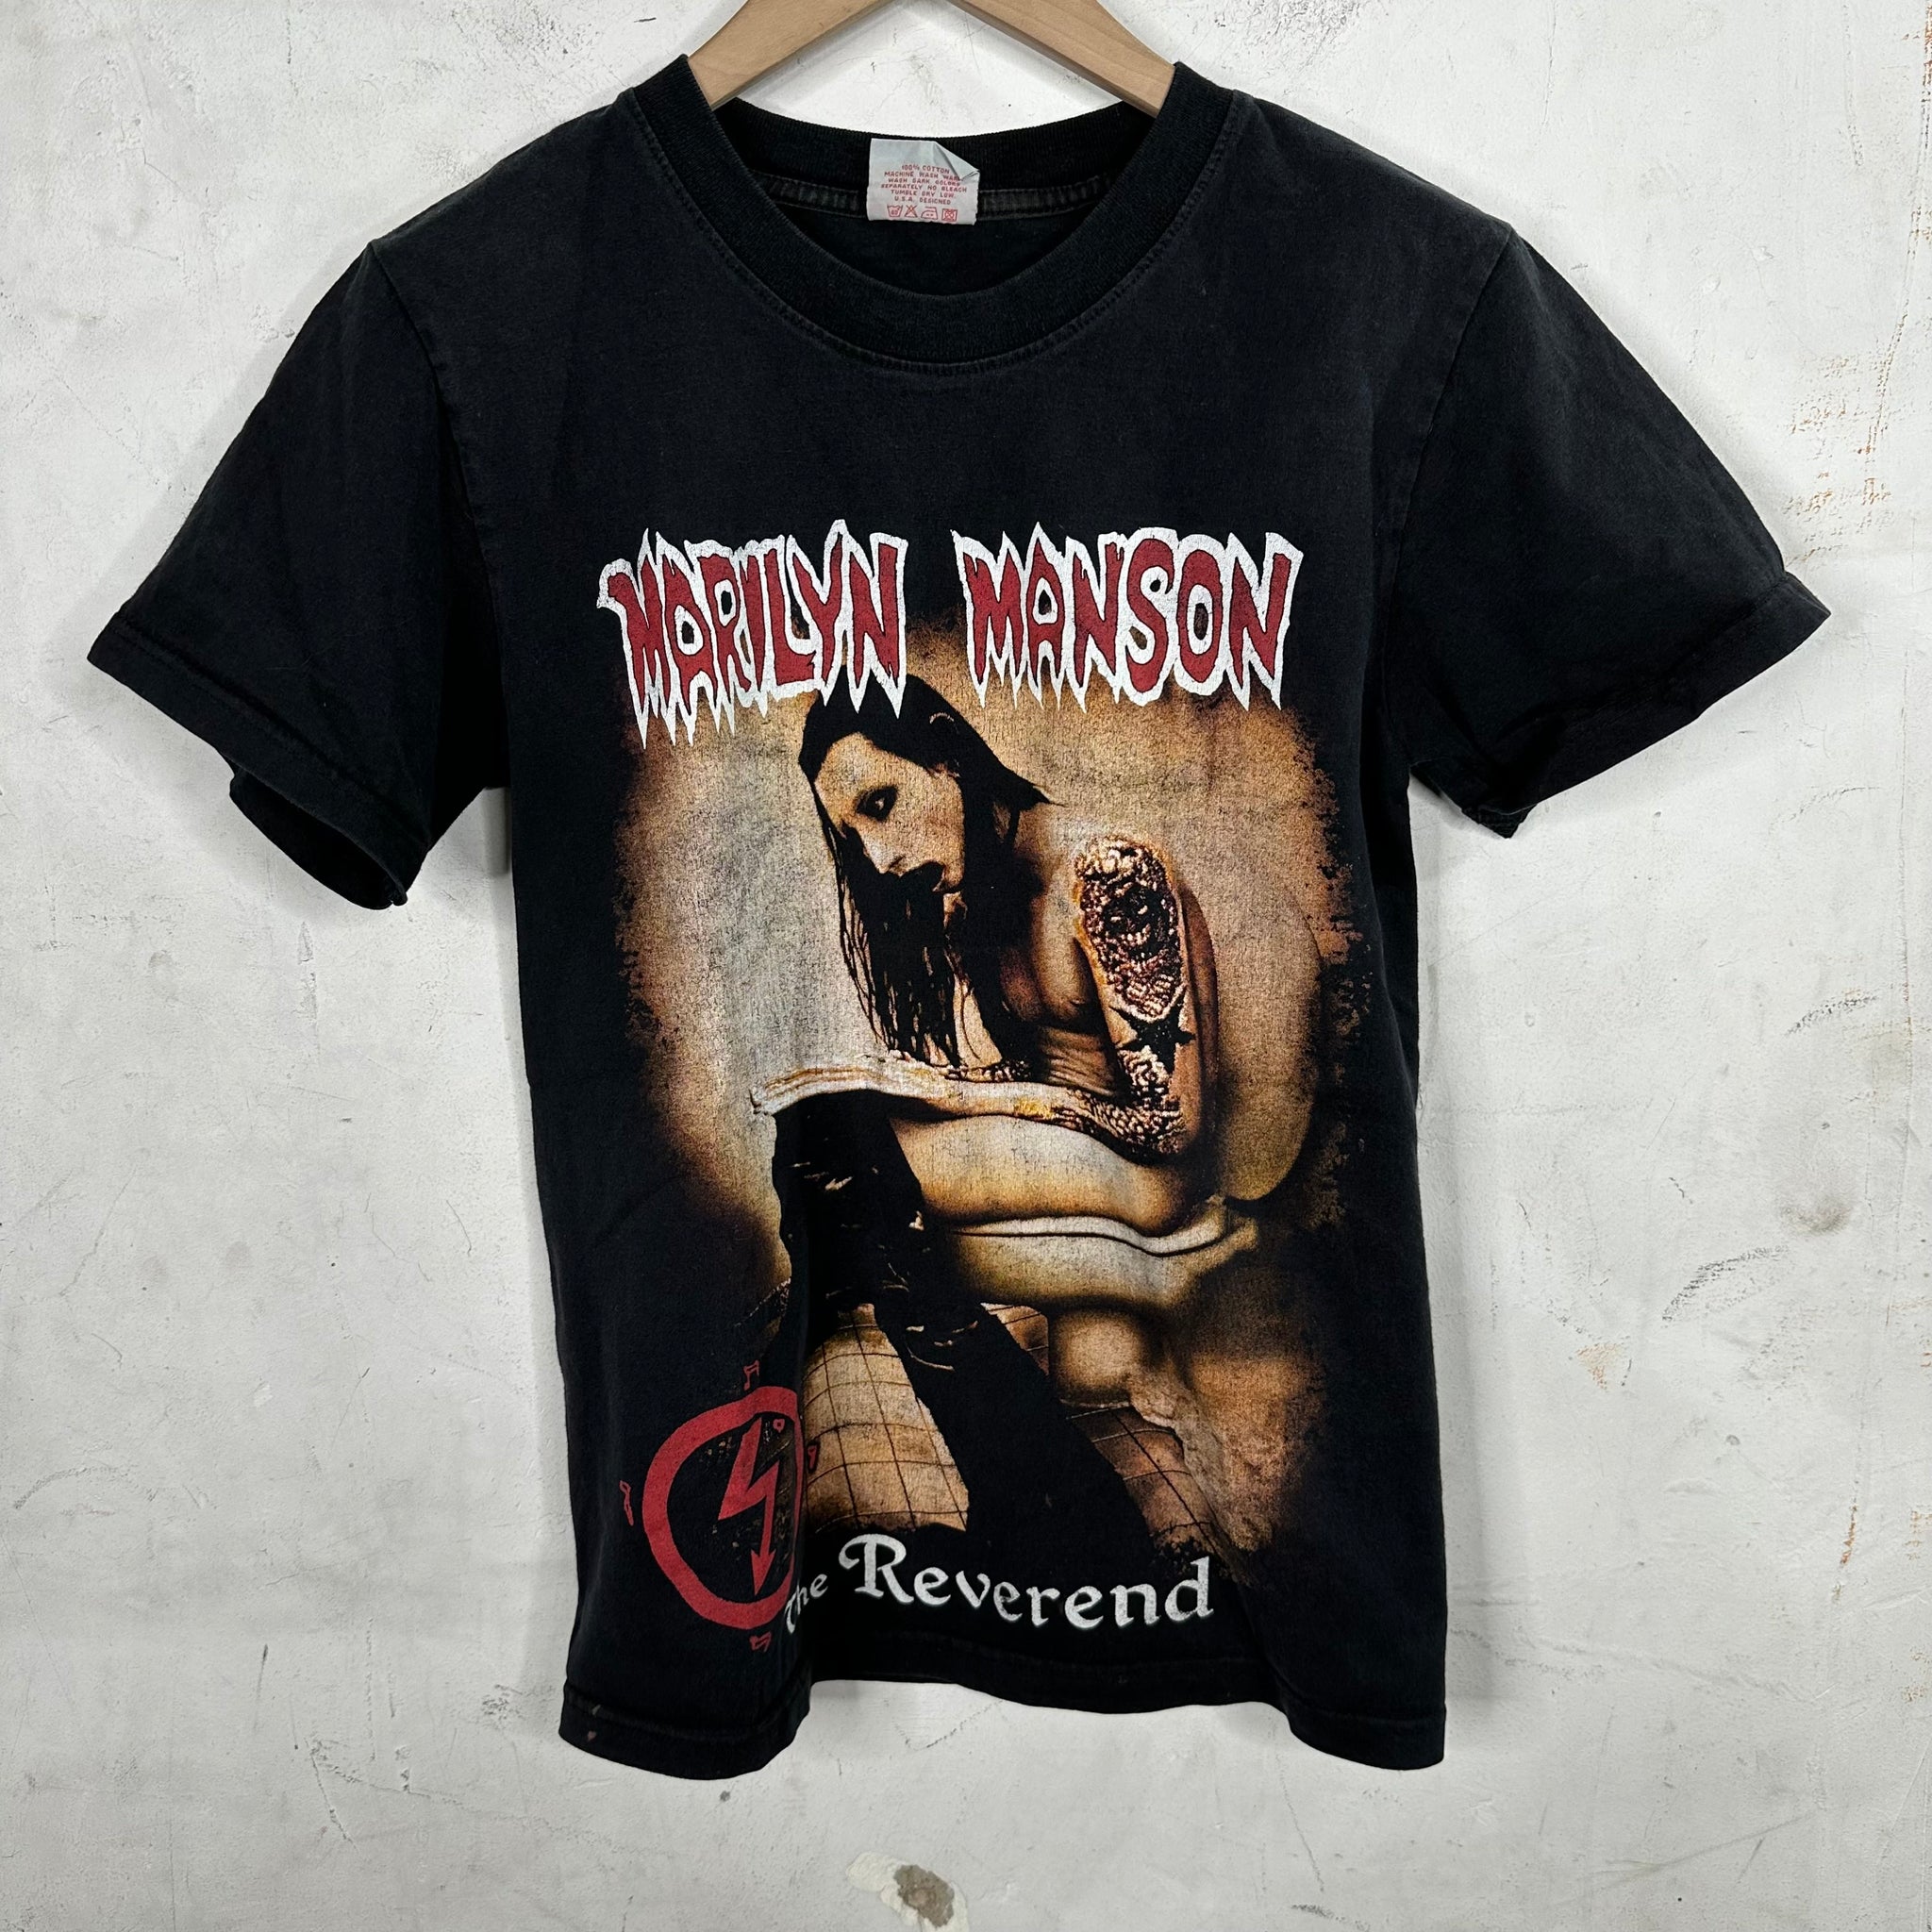 Vintage Manson “The Reverend” T-shirt